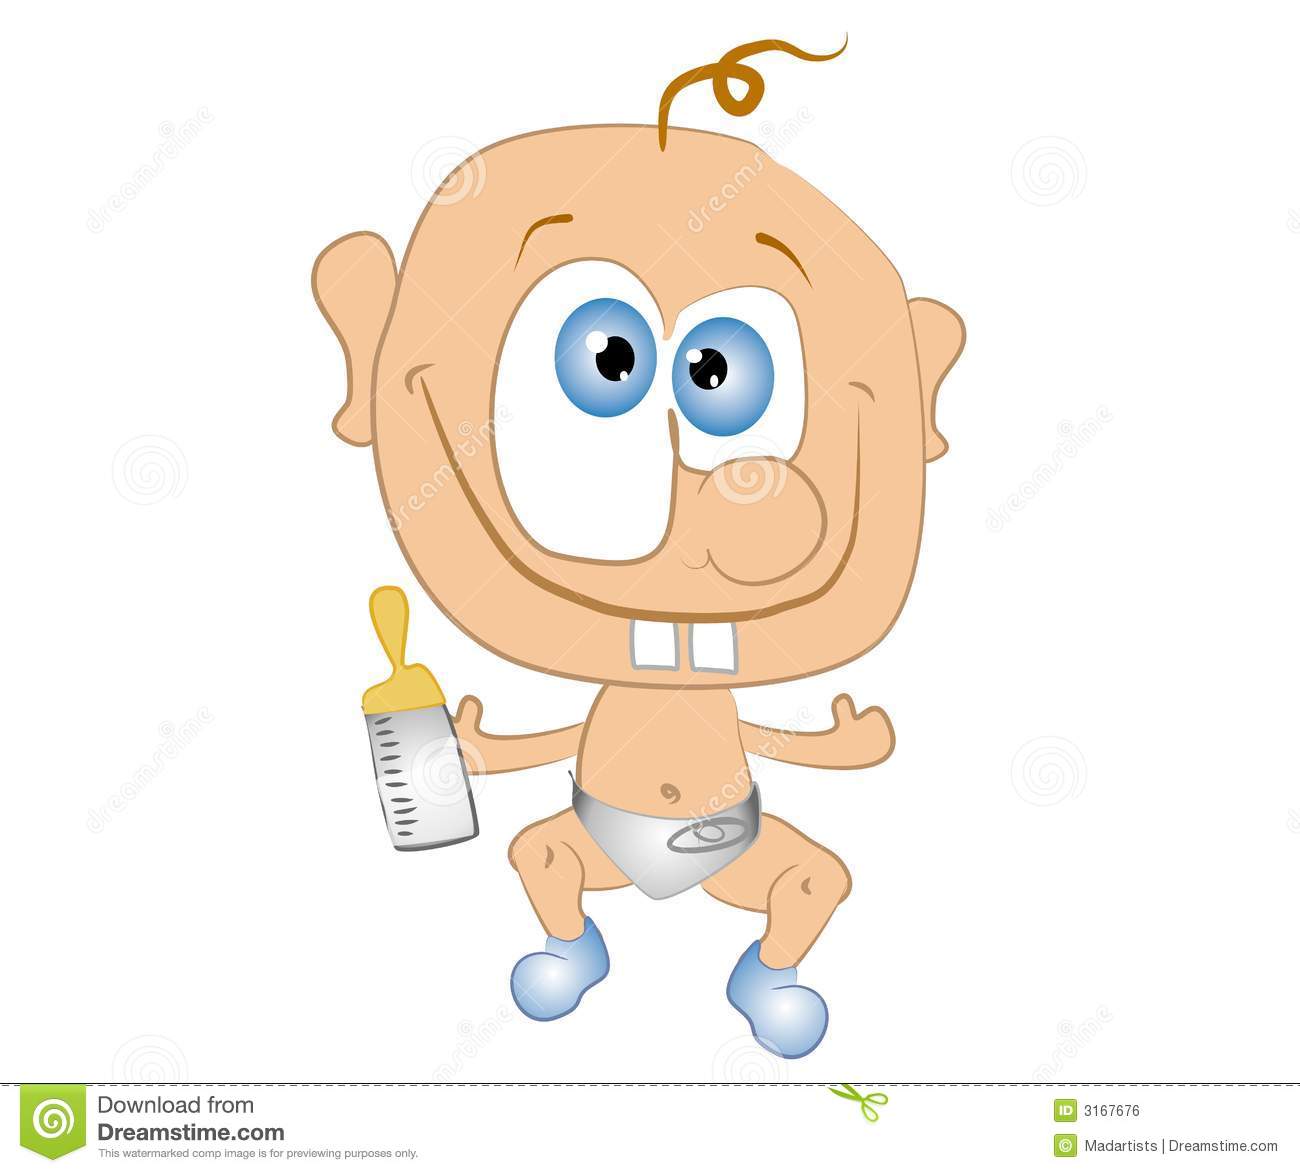 Cartoon Happy Baby Clip Art Royalty Free Stock Image   Image  3167676